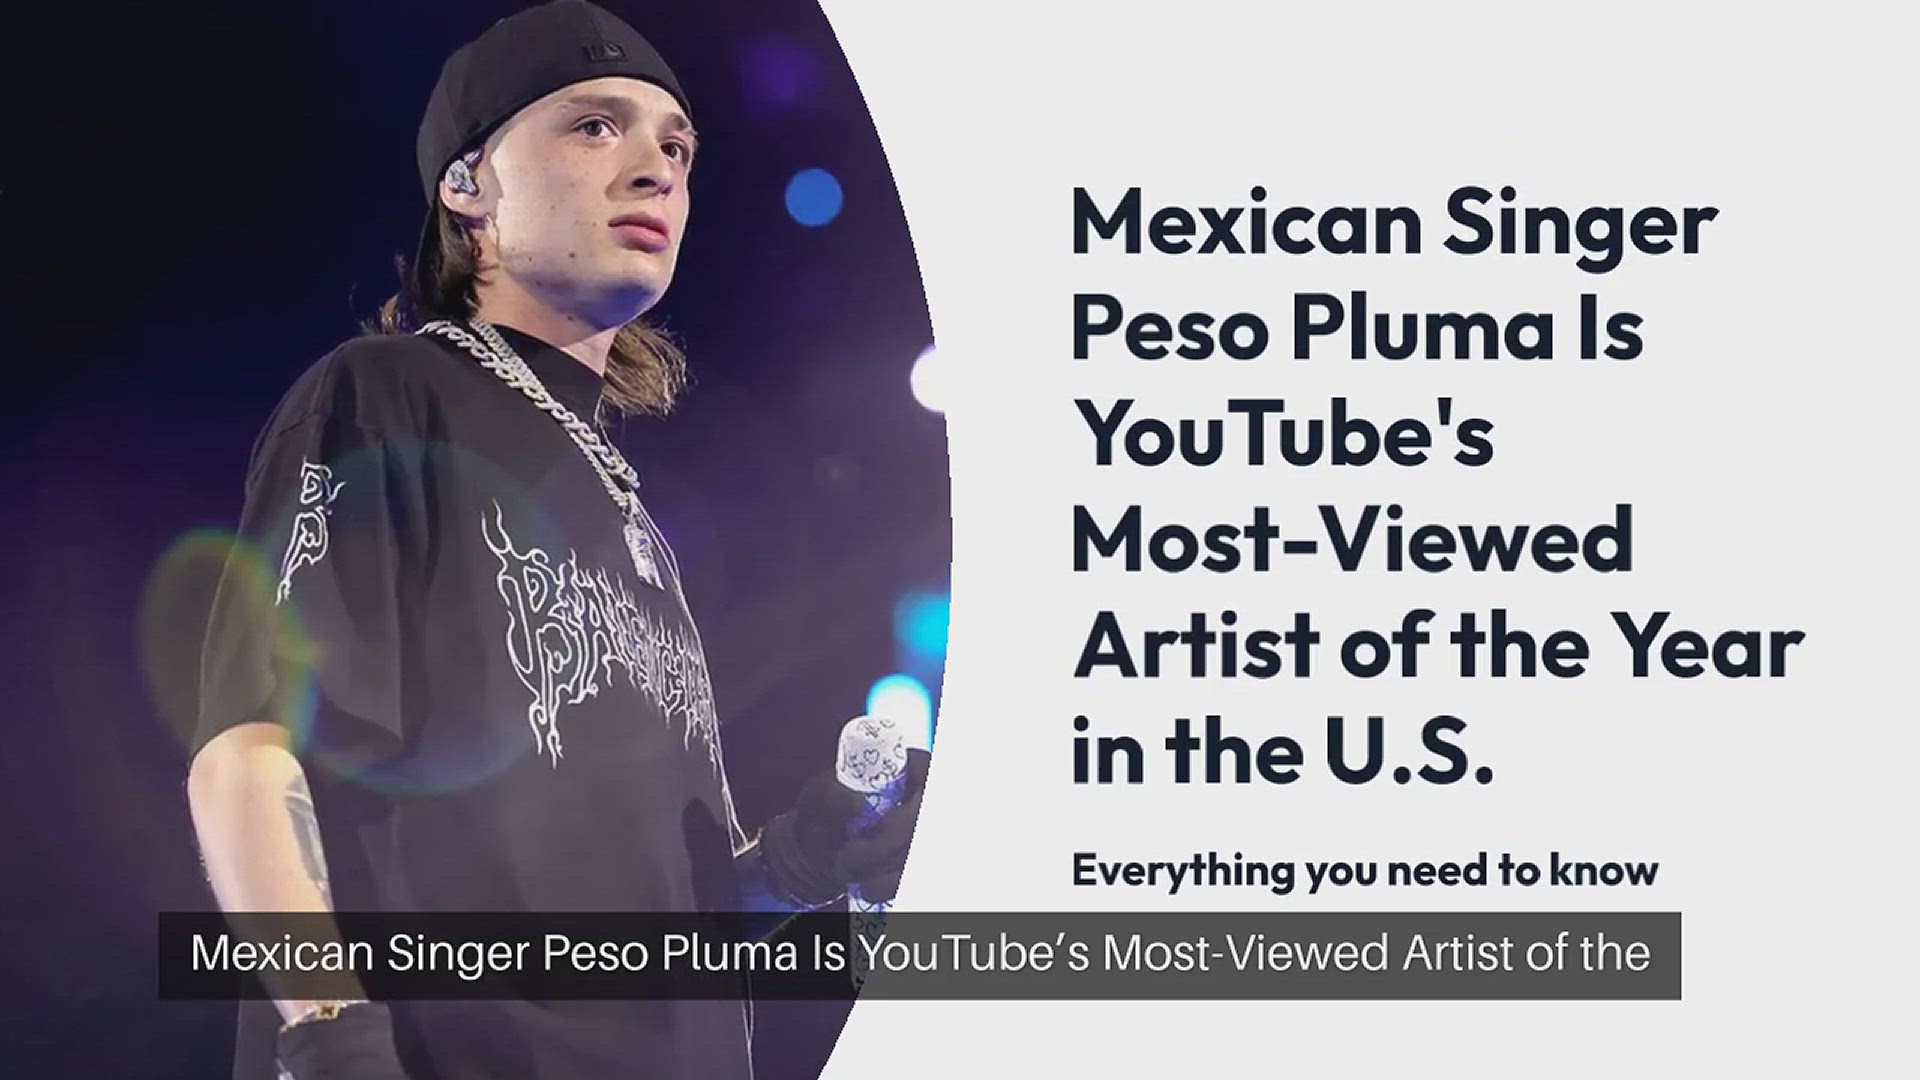 Peso Pluma on Música Mexicana's Global Takeover, New Album and More